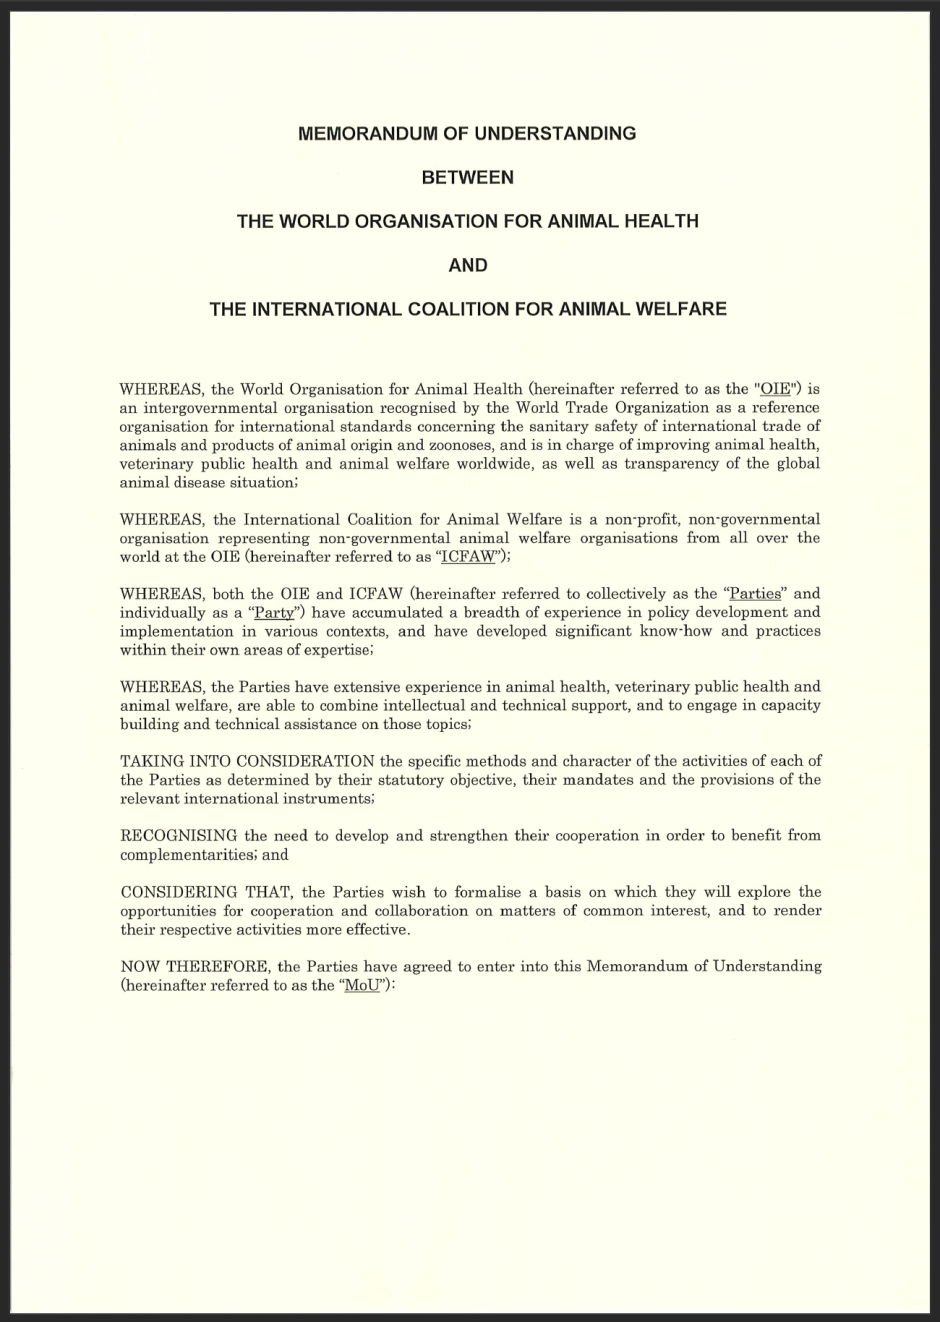 Memorandum of Understanding between the International Coalition for Animal Welfare (ICFAW) and the OIE